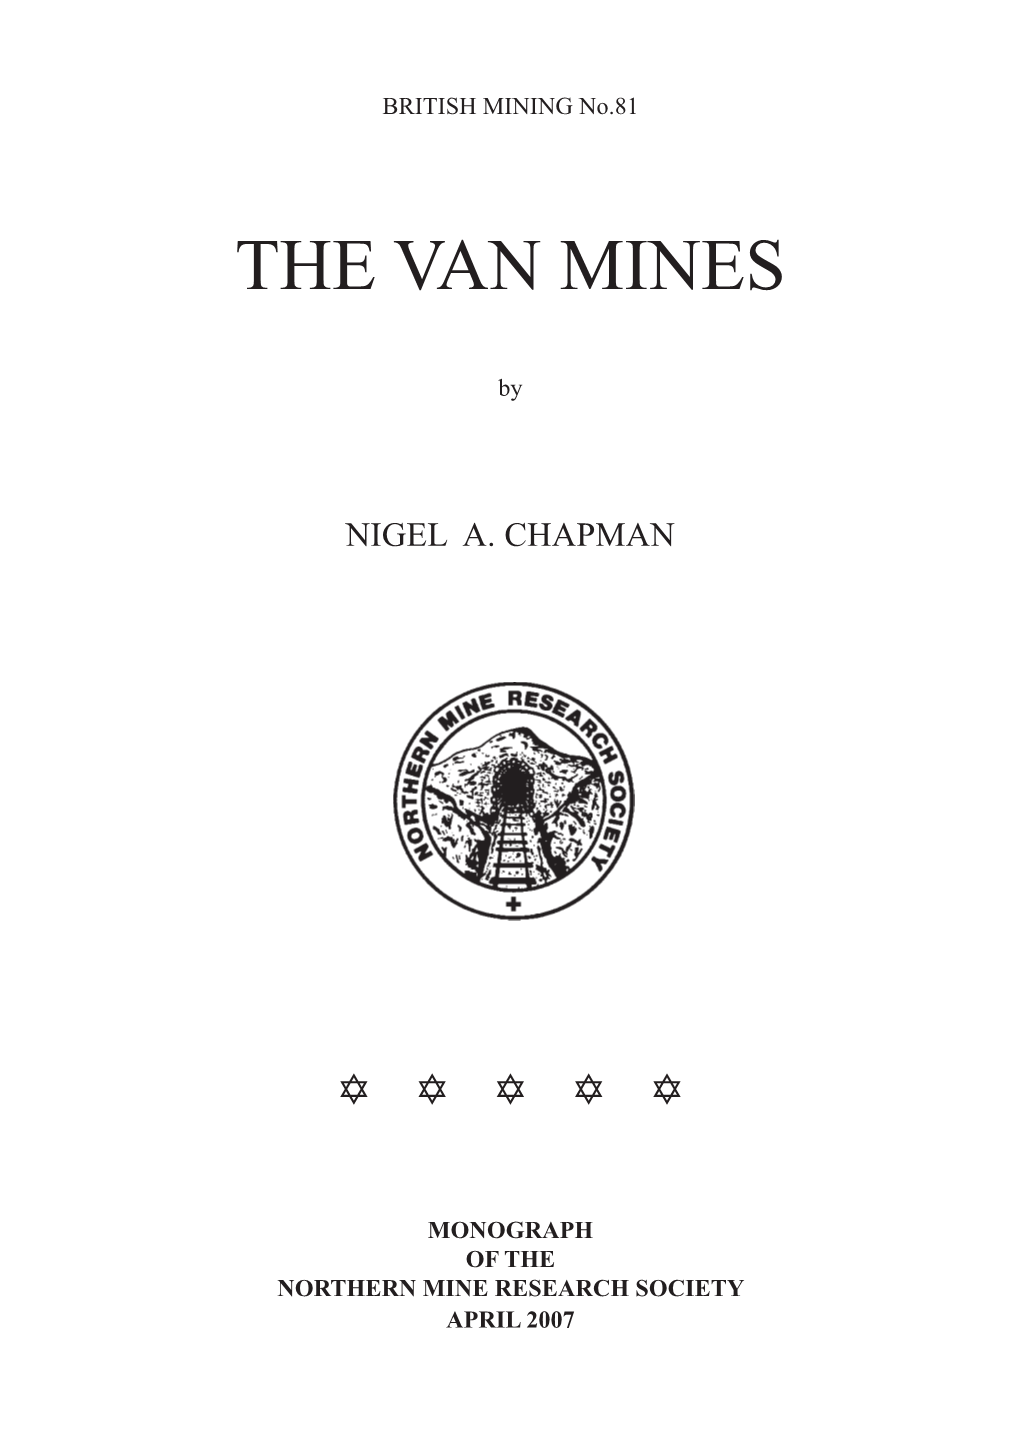 The Van Mines